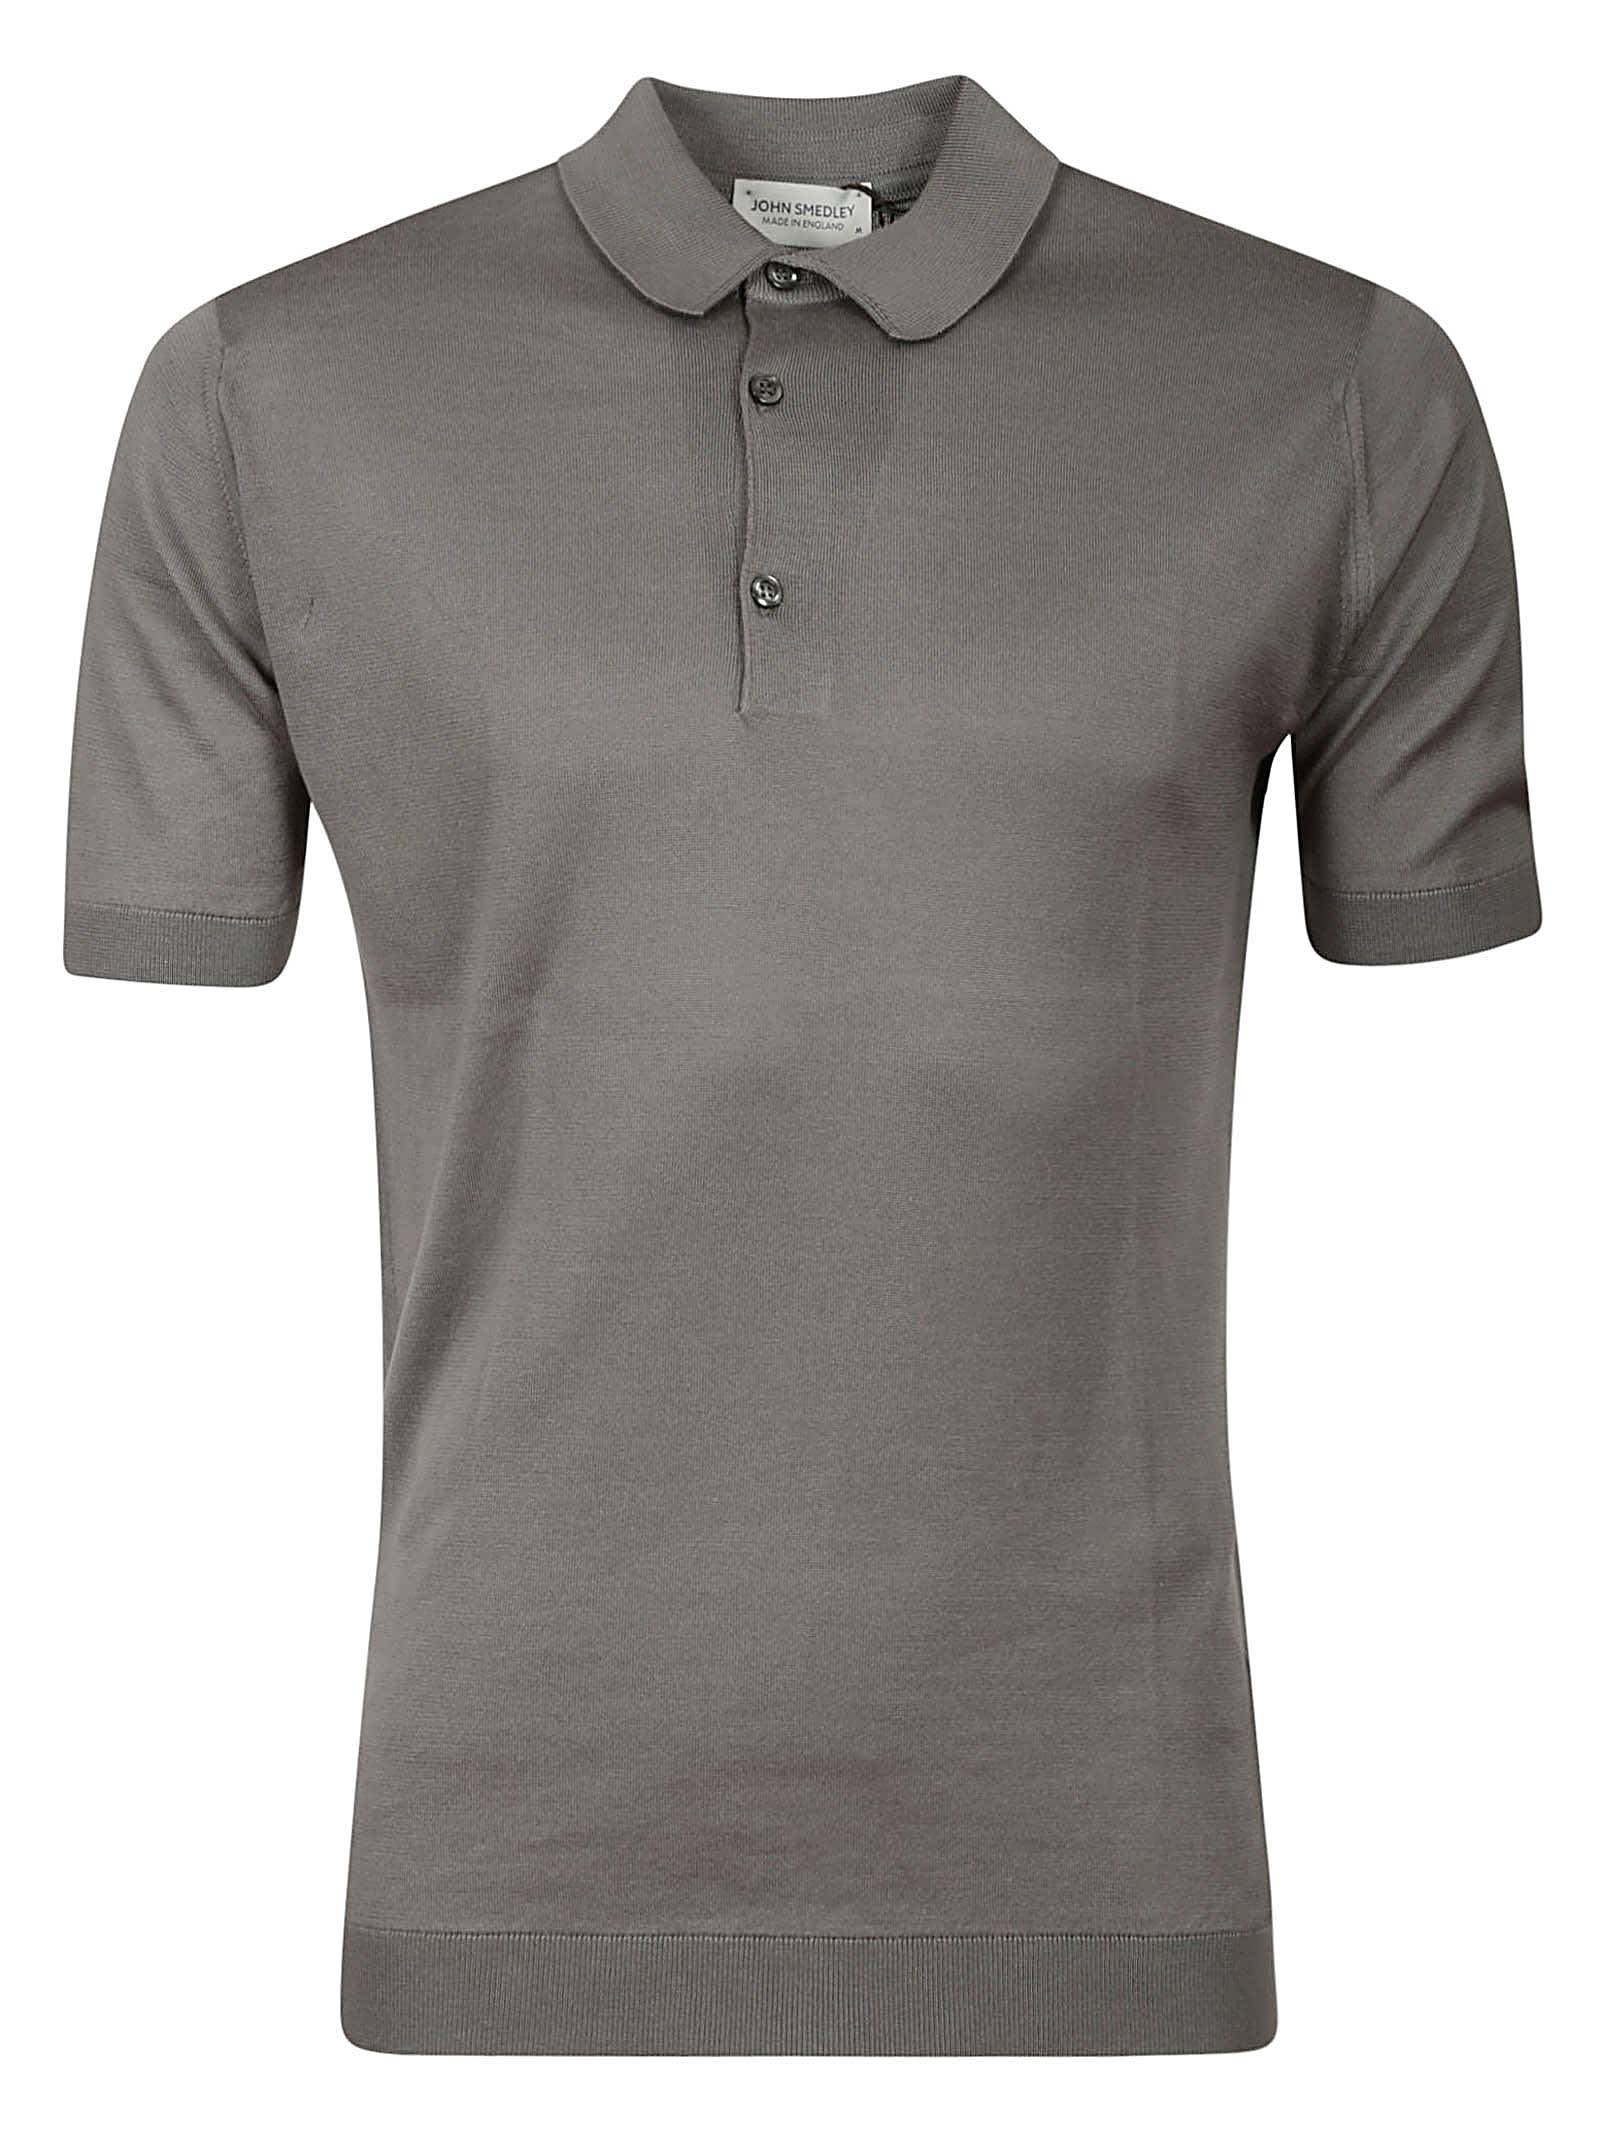 JOHN SMEDLEY Shirts for Men | ModeSens